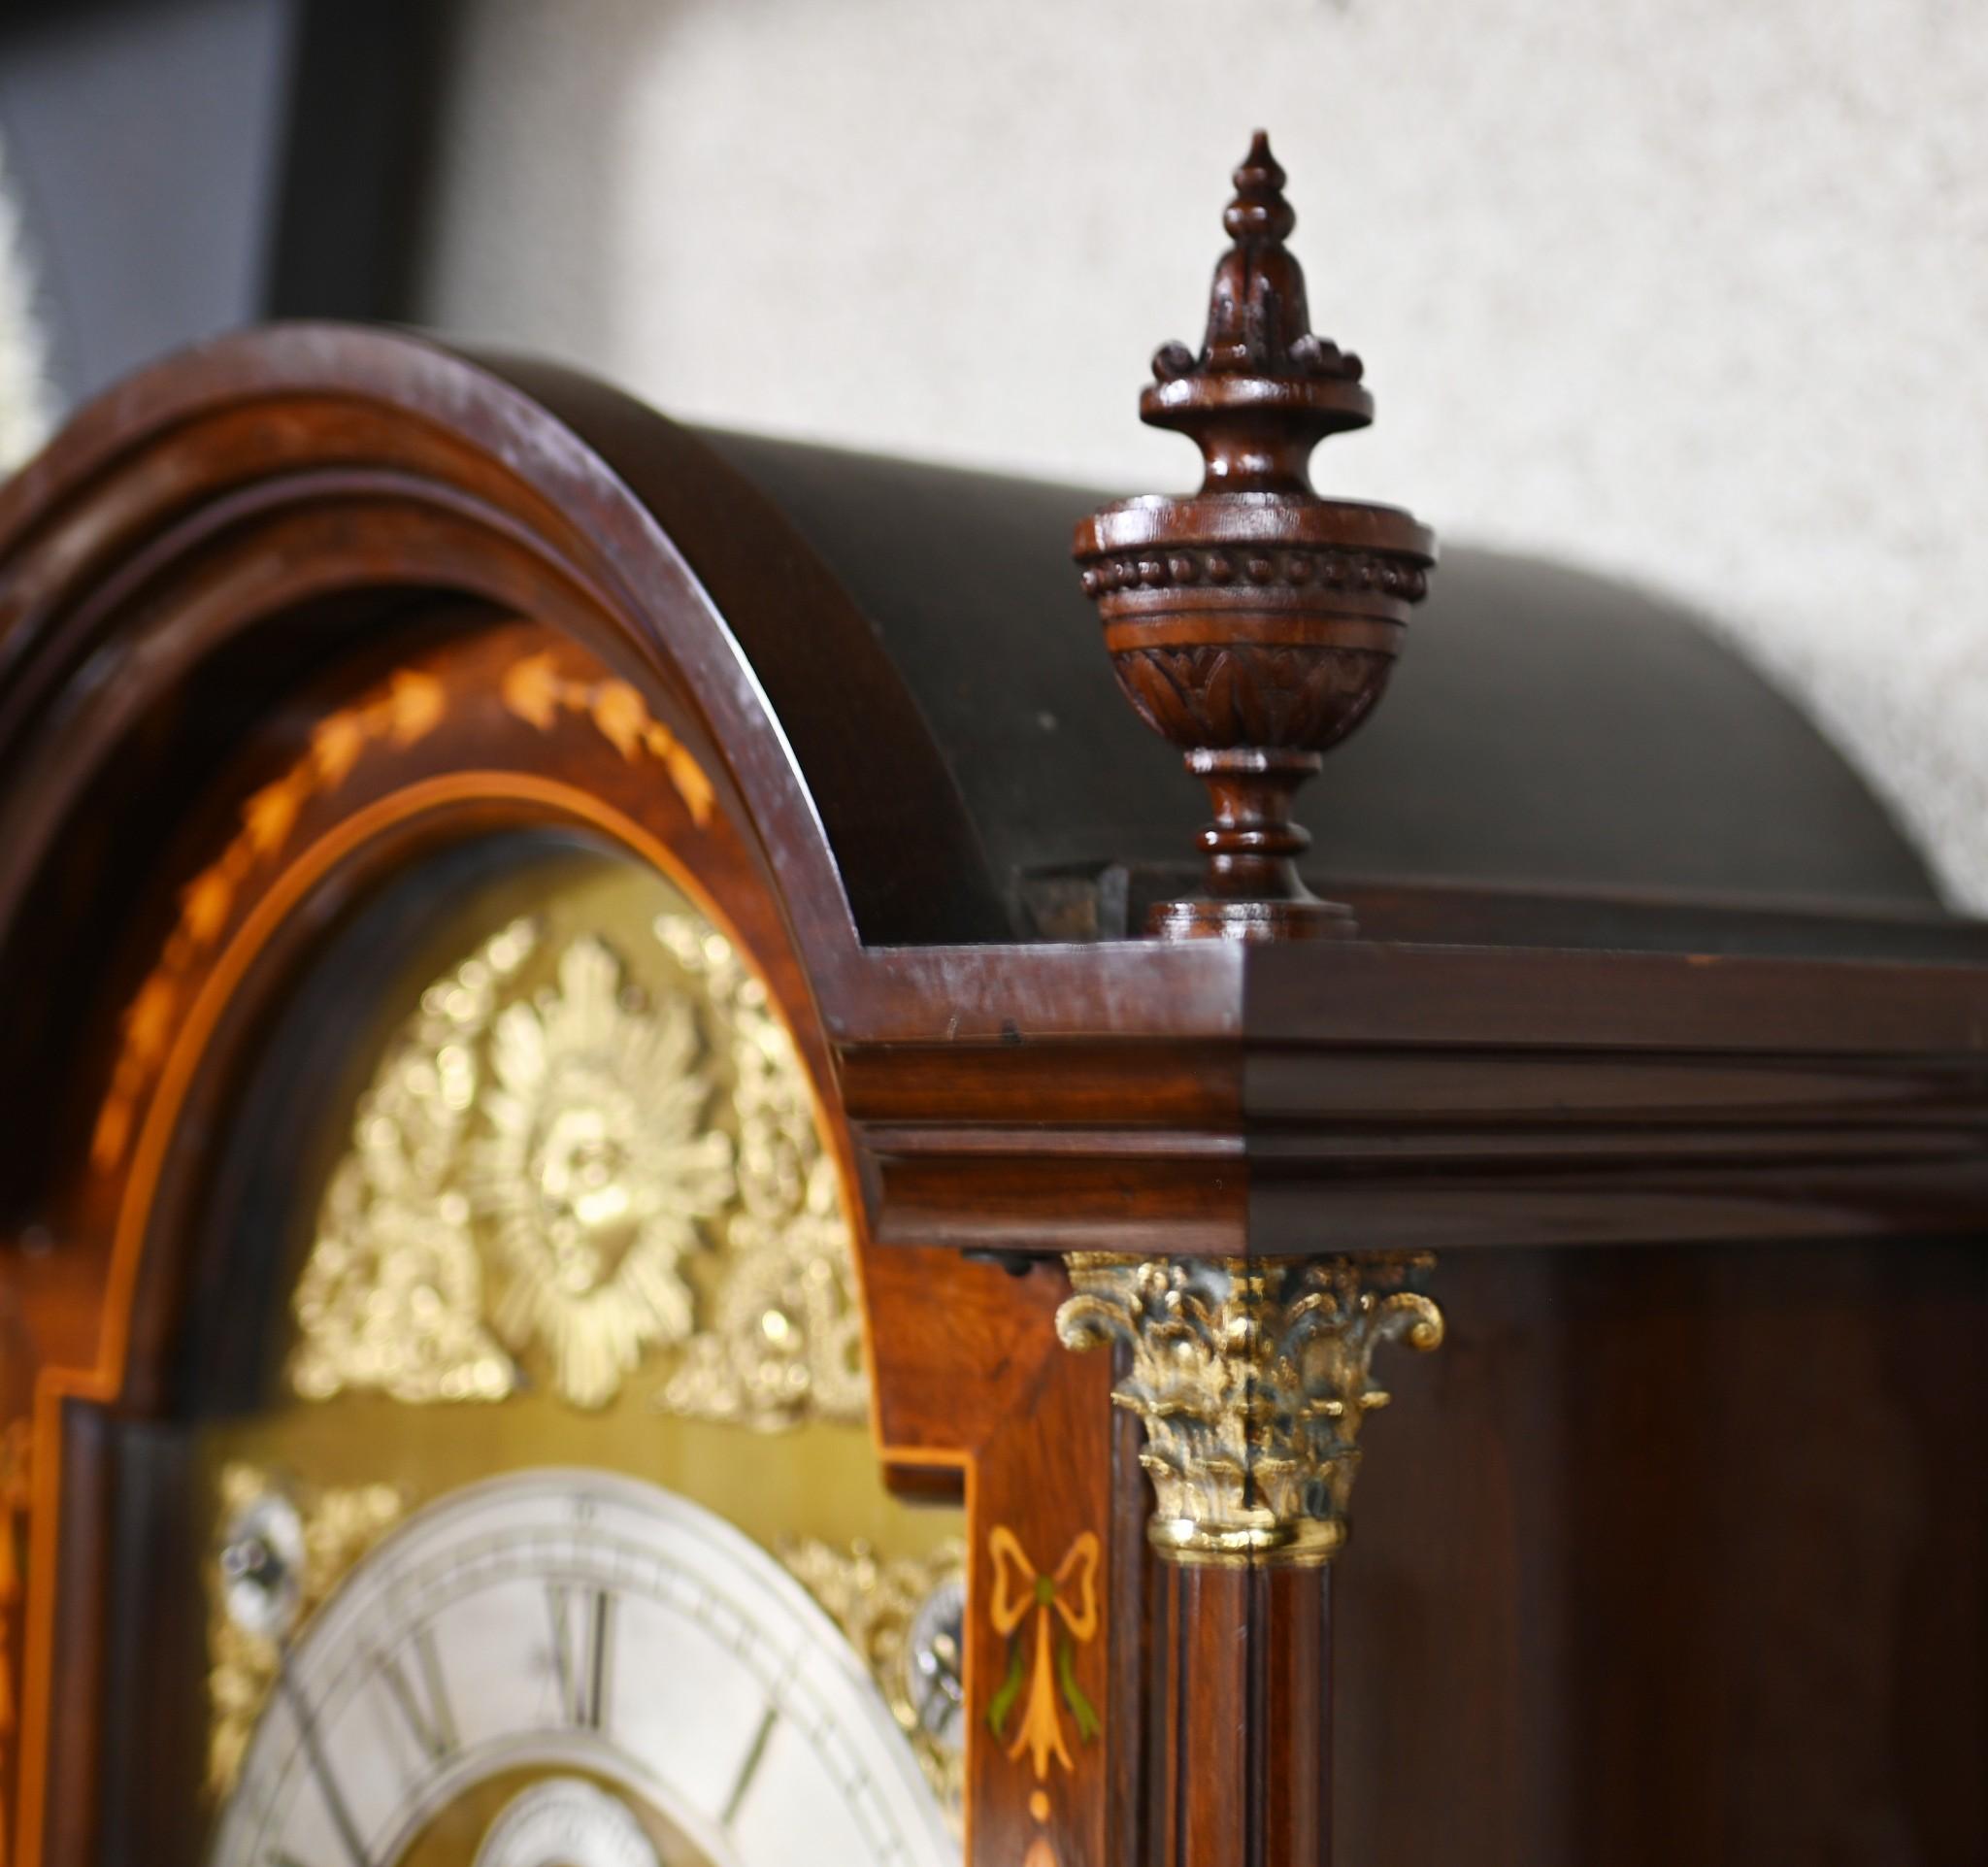 Sheraton Großvater-Uhr mit Mahagoni-Intarsien Resolute (Ende des 20. Jahrhunderts) im Angebot